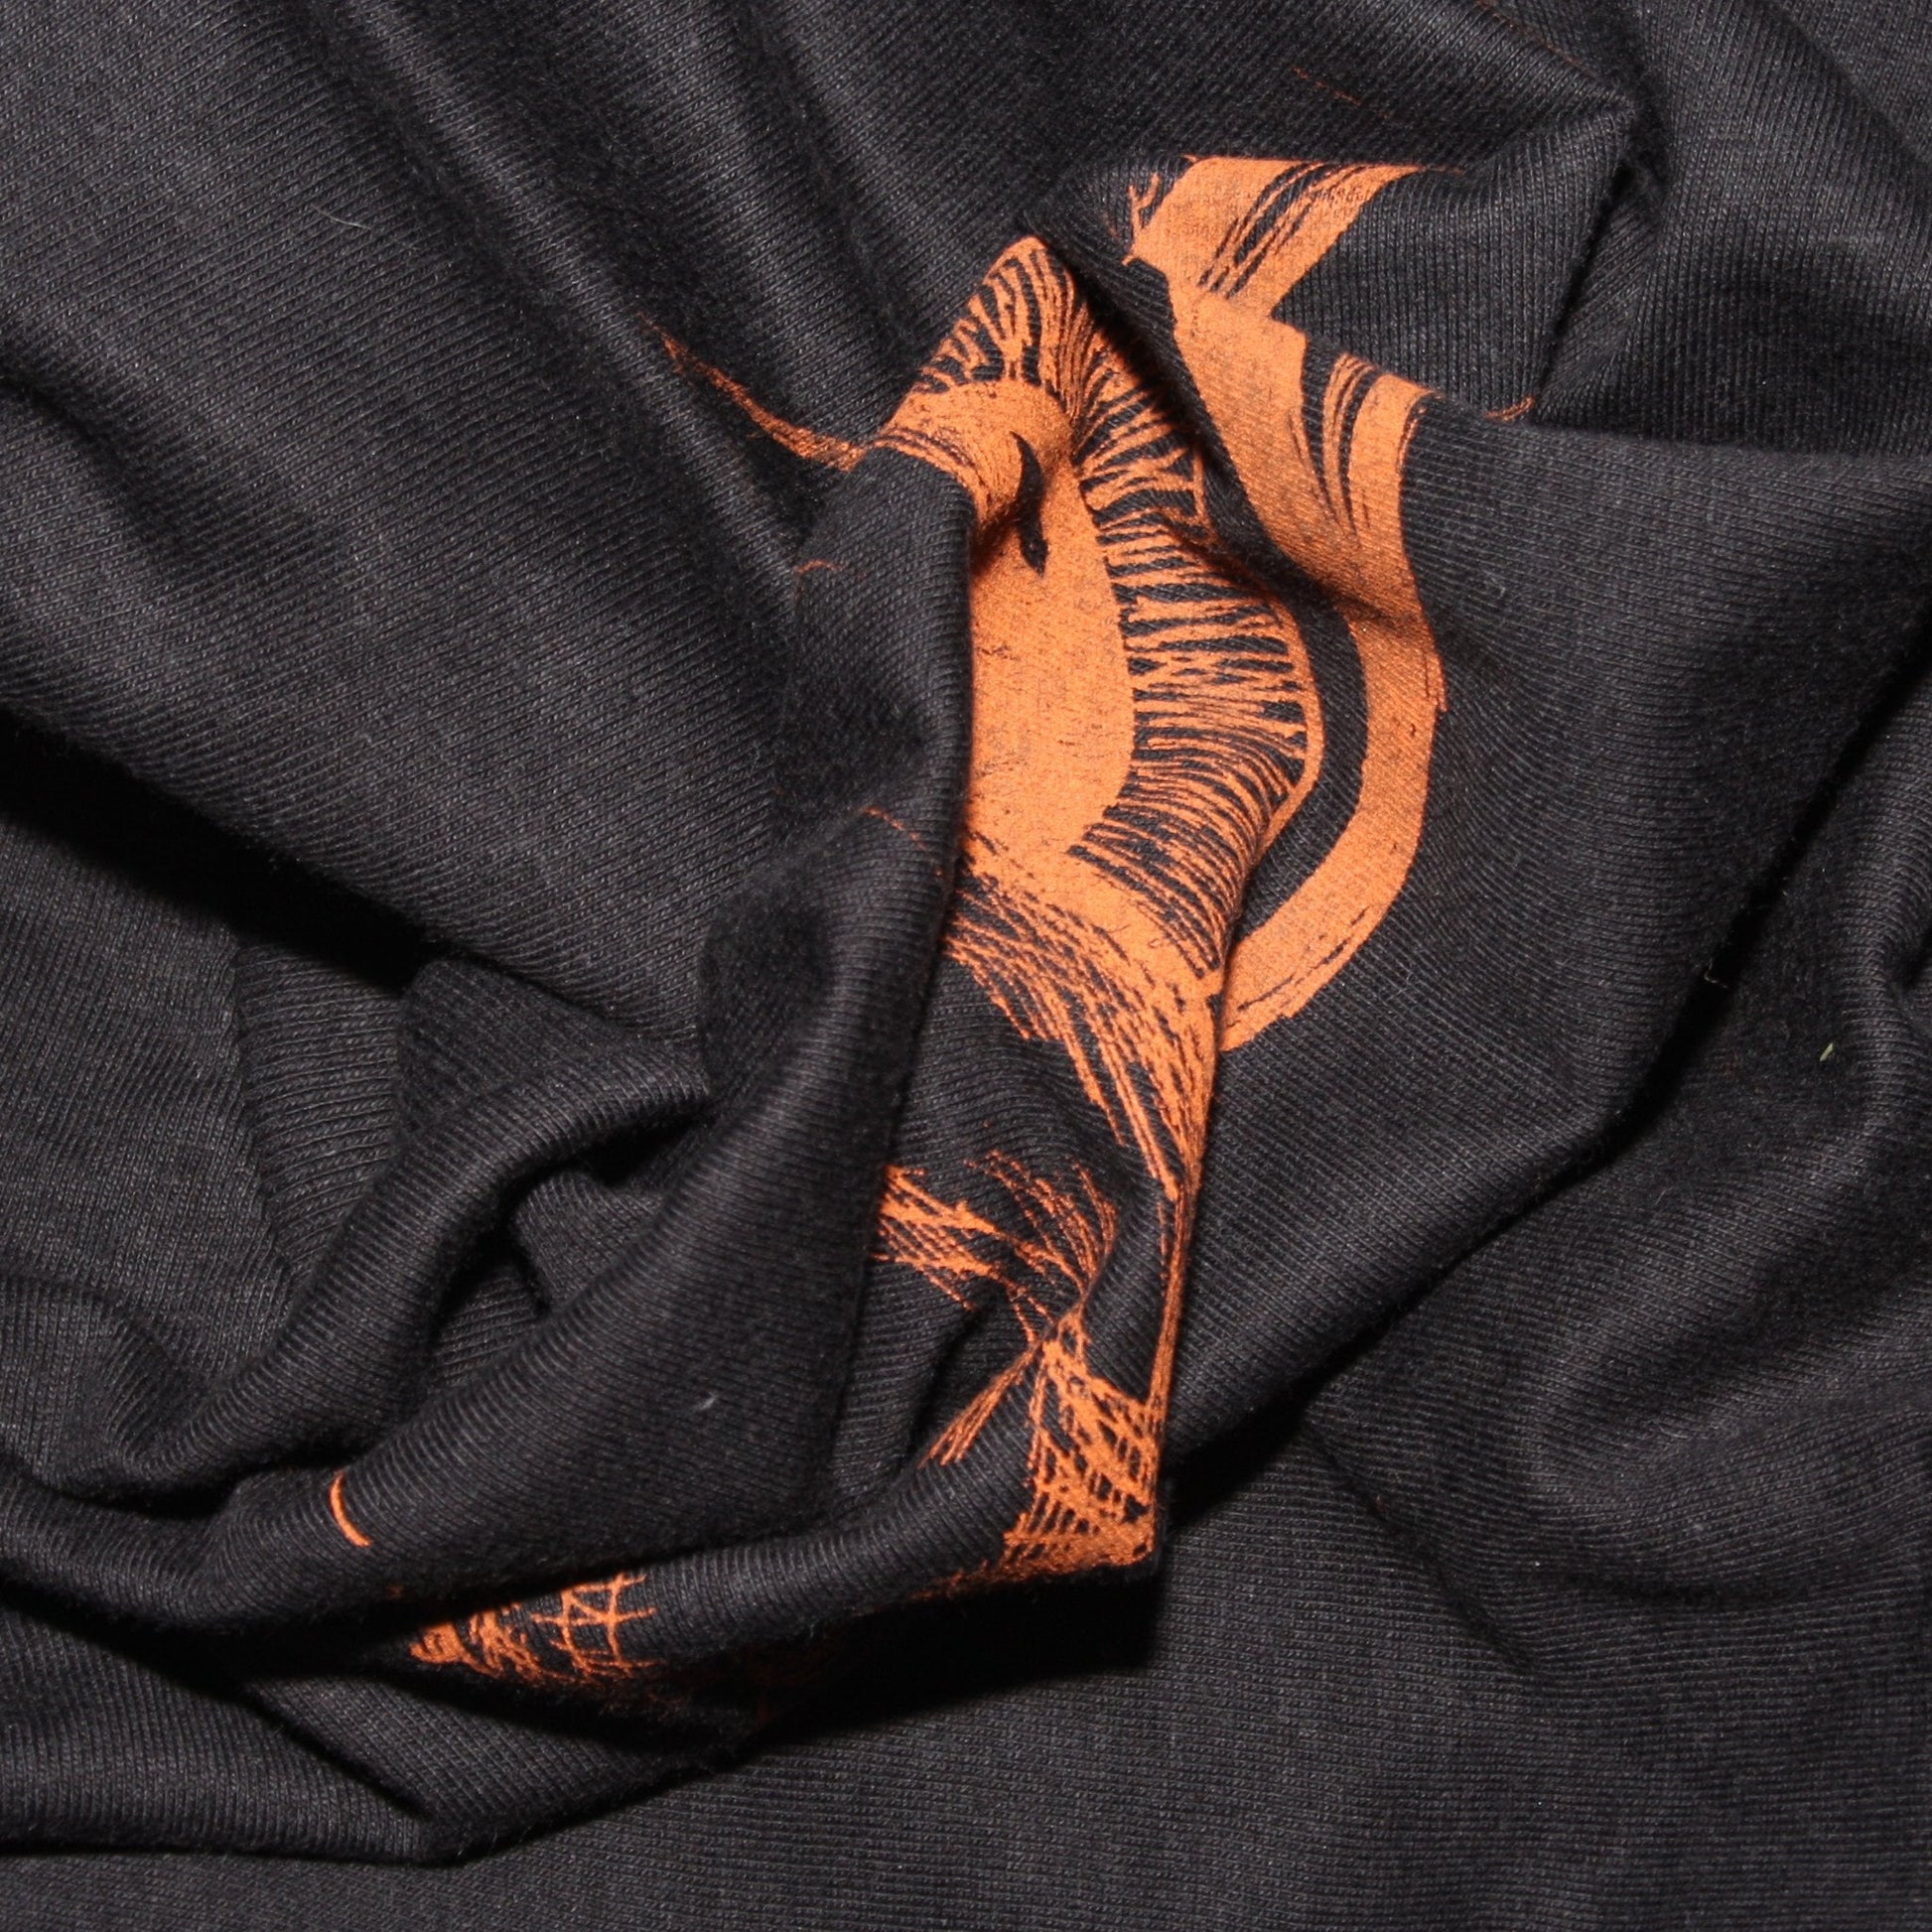 Kaiju eye tee - Black T-Shirt with Orange print - ElRatDesigns - T Shirt